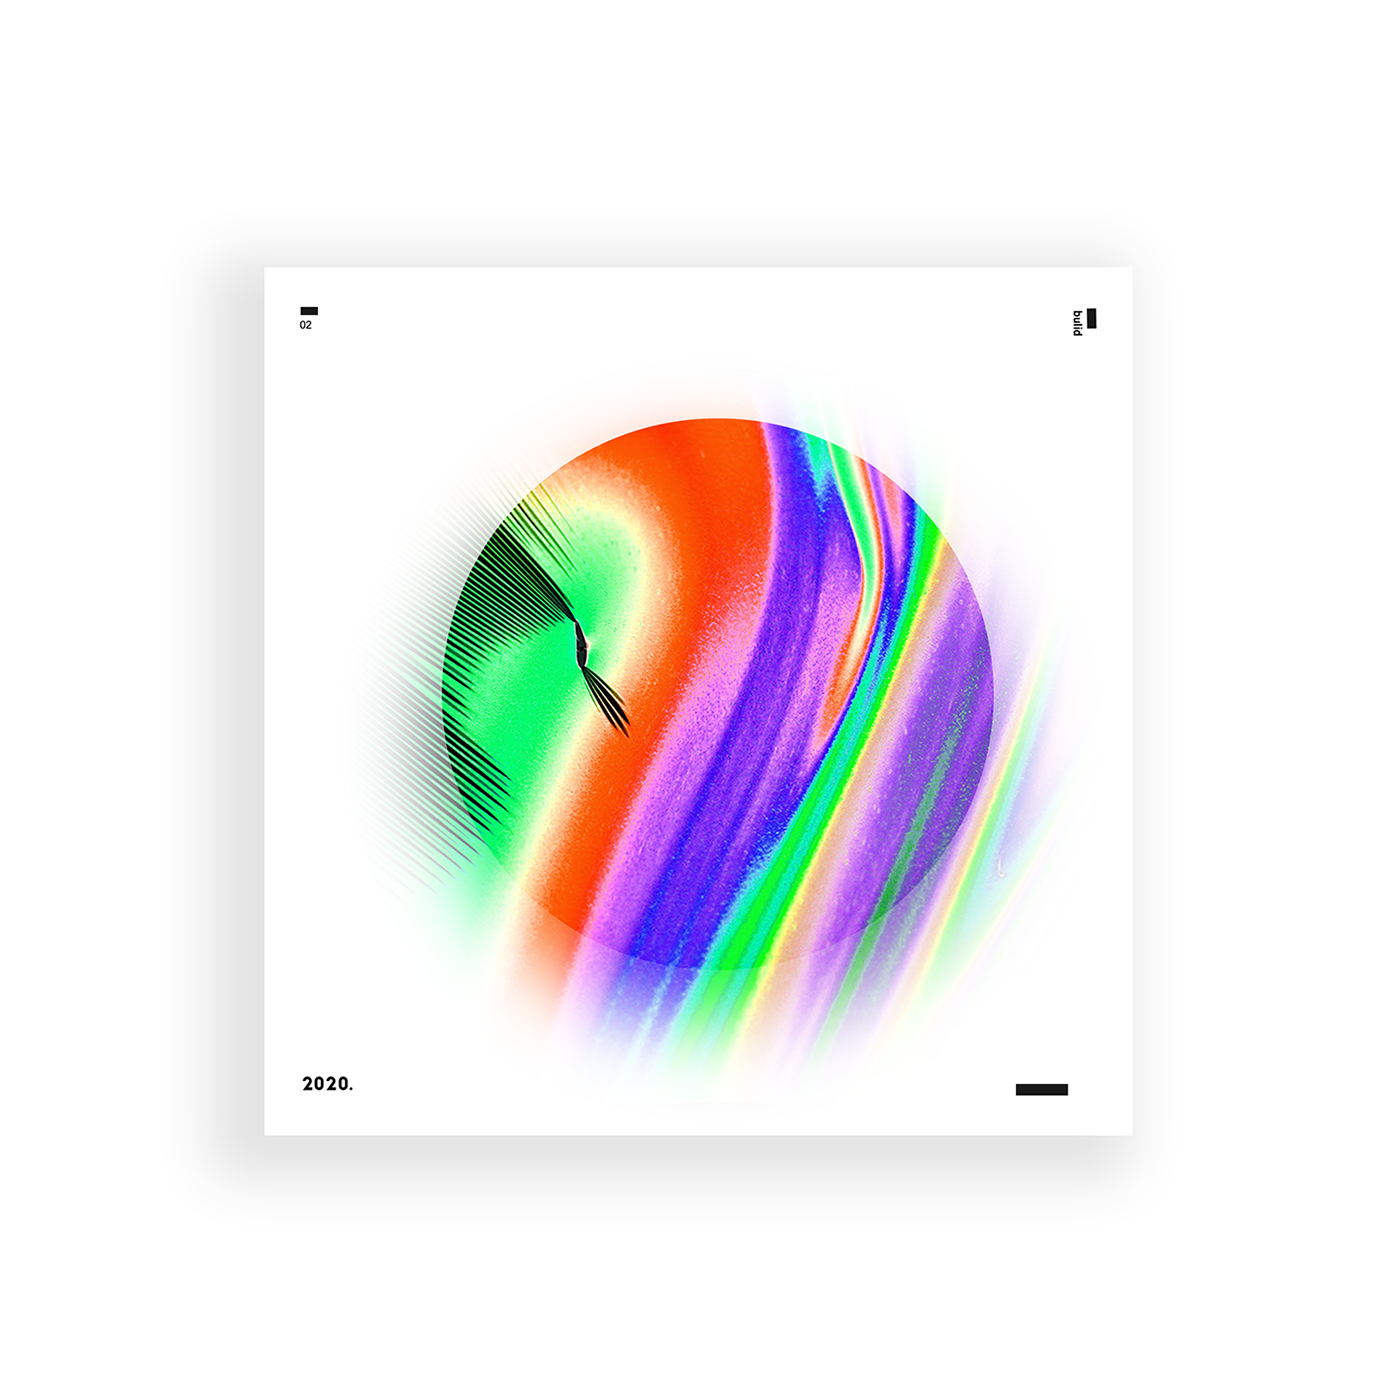 RGBA 3D light chroma abberation rainbow prisim Beautiful abstract colorful